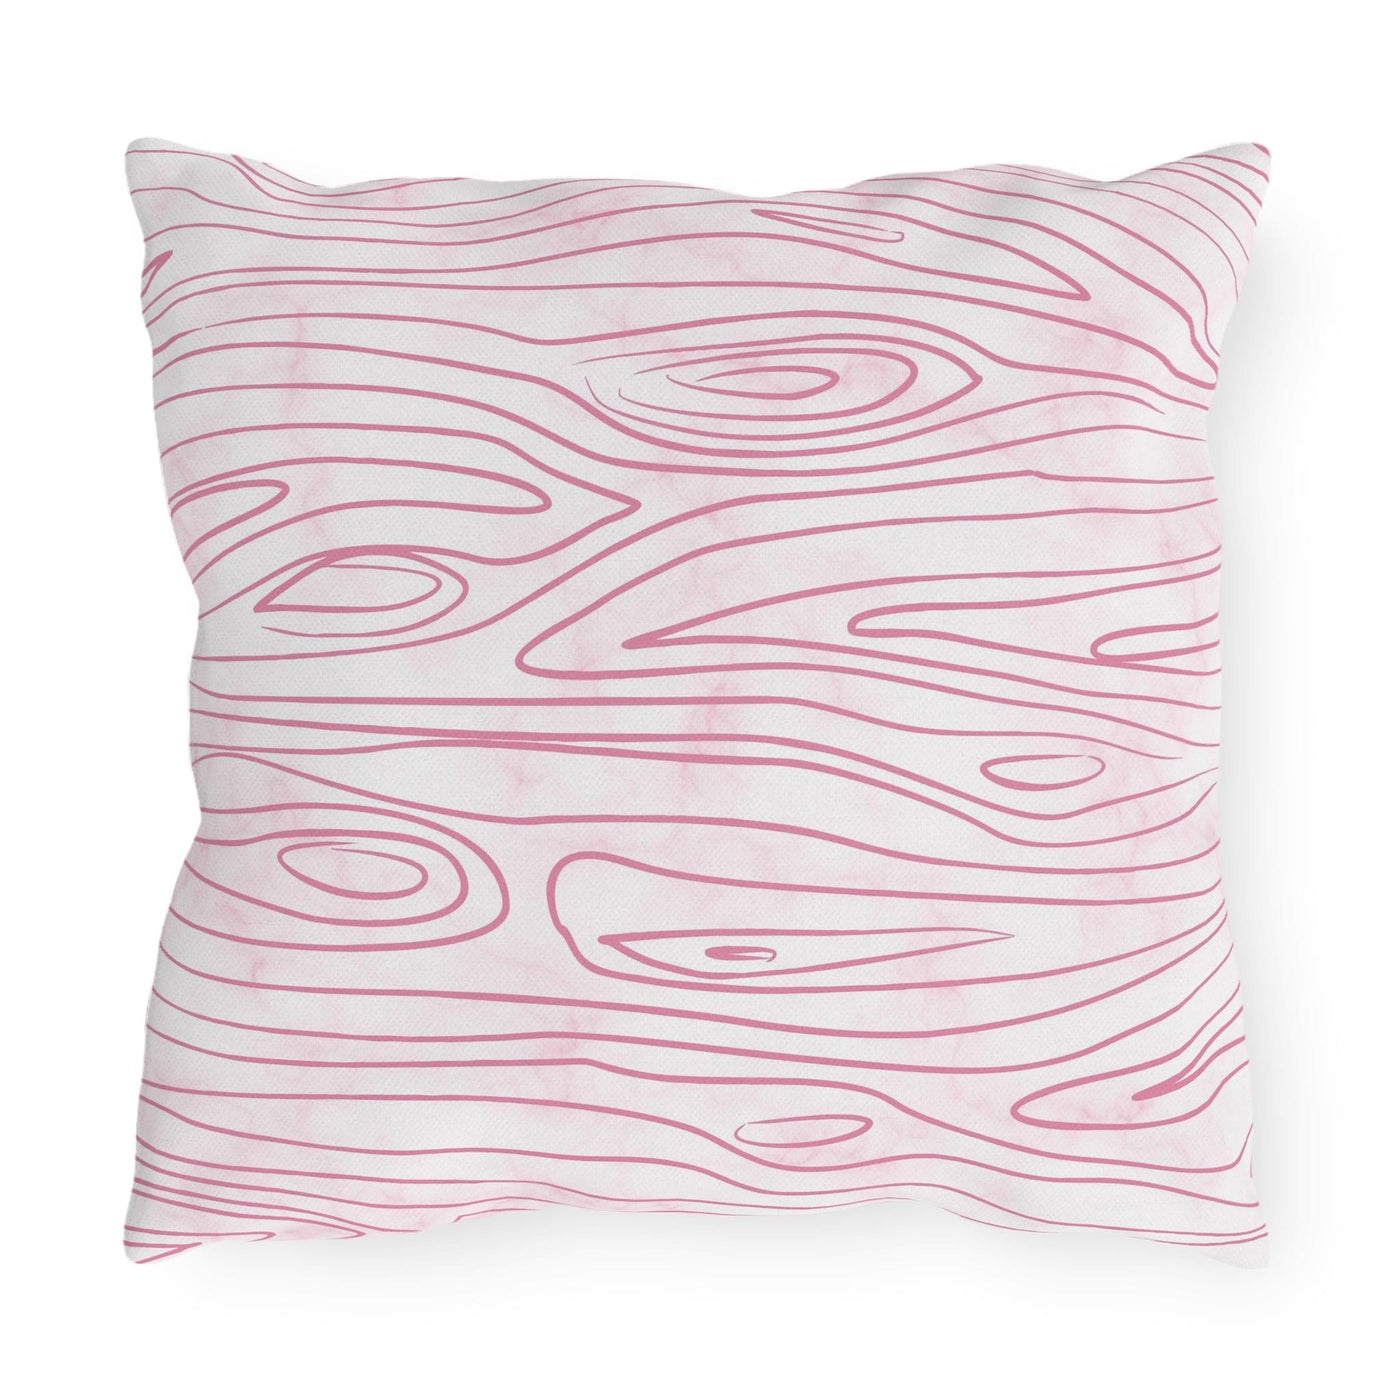 Decorative Outdoor Pillows - Set Of 2 Pink Line Art Sketch Print | Throw Indoor